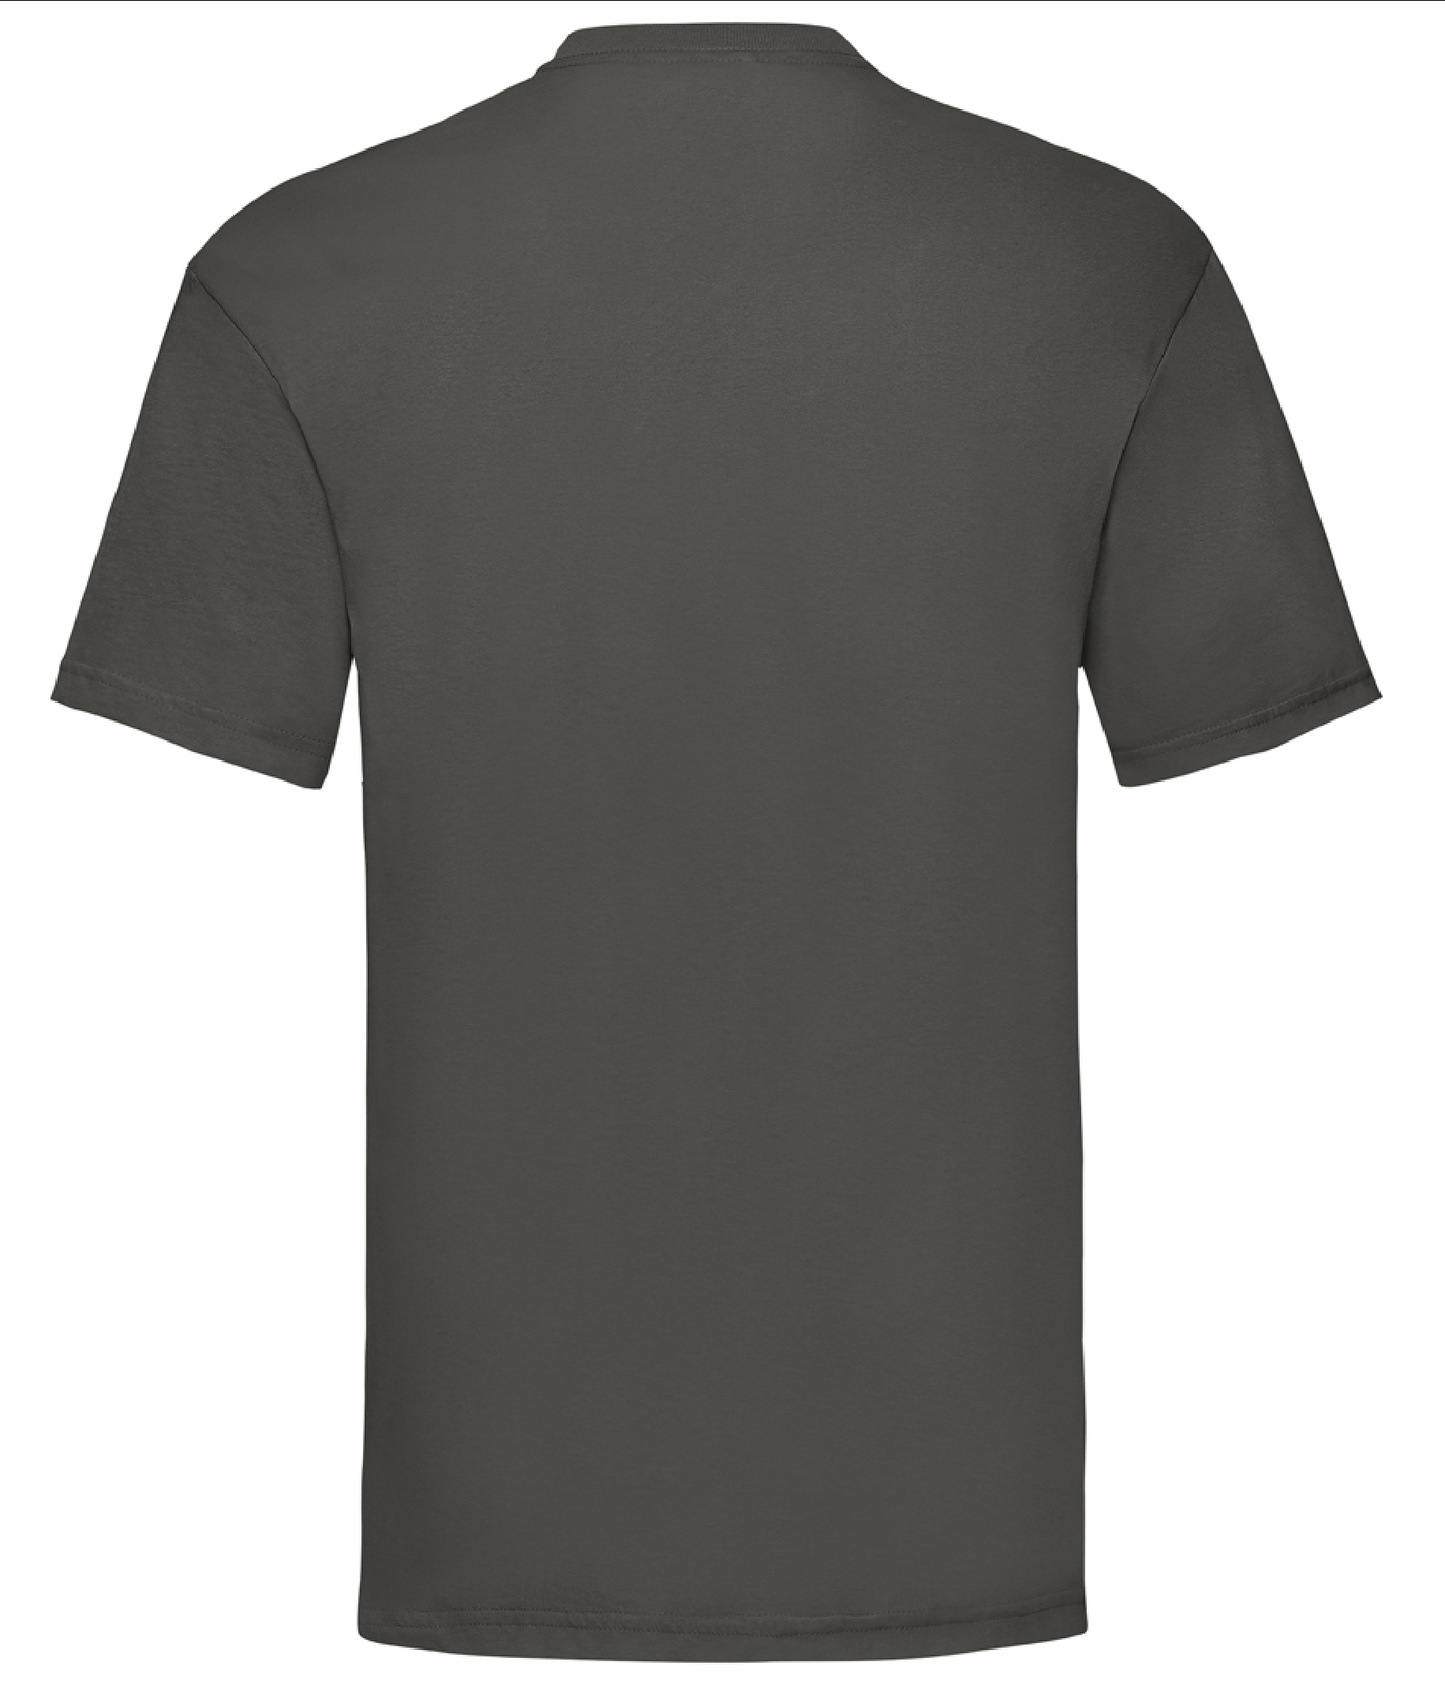 Powerhouse Grey T-Shirt